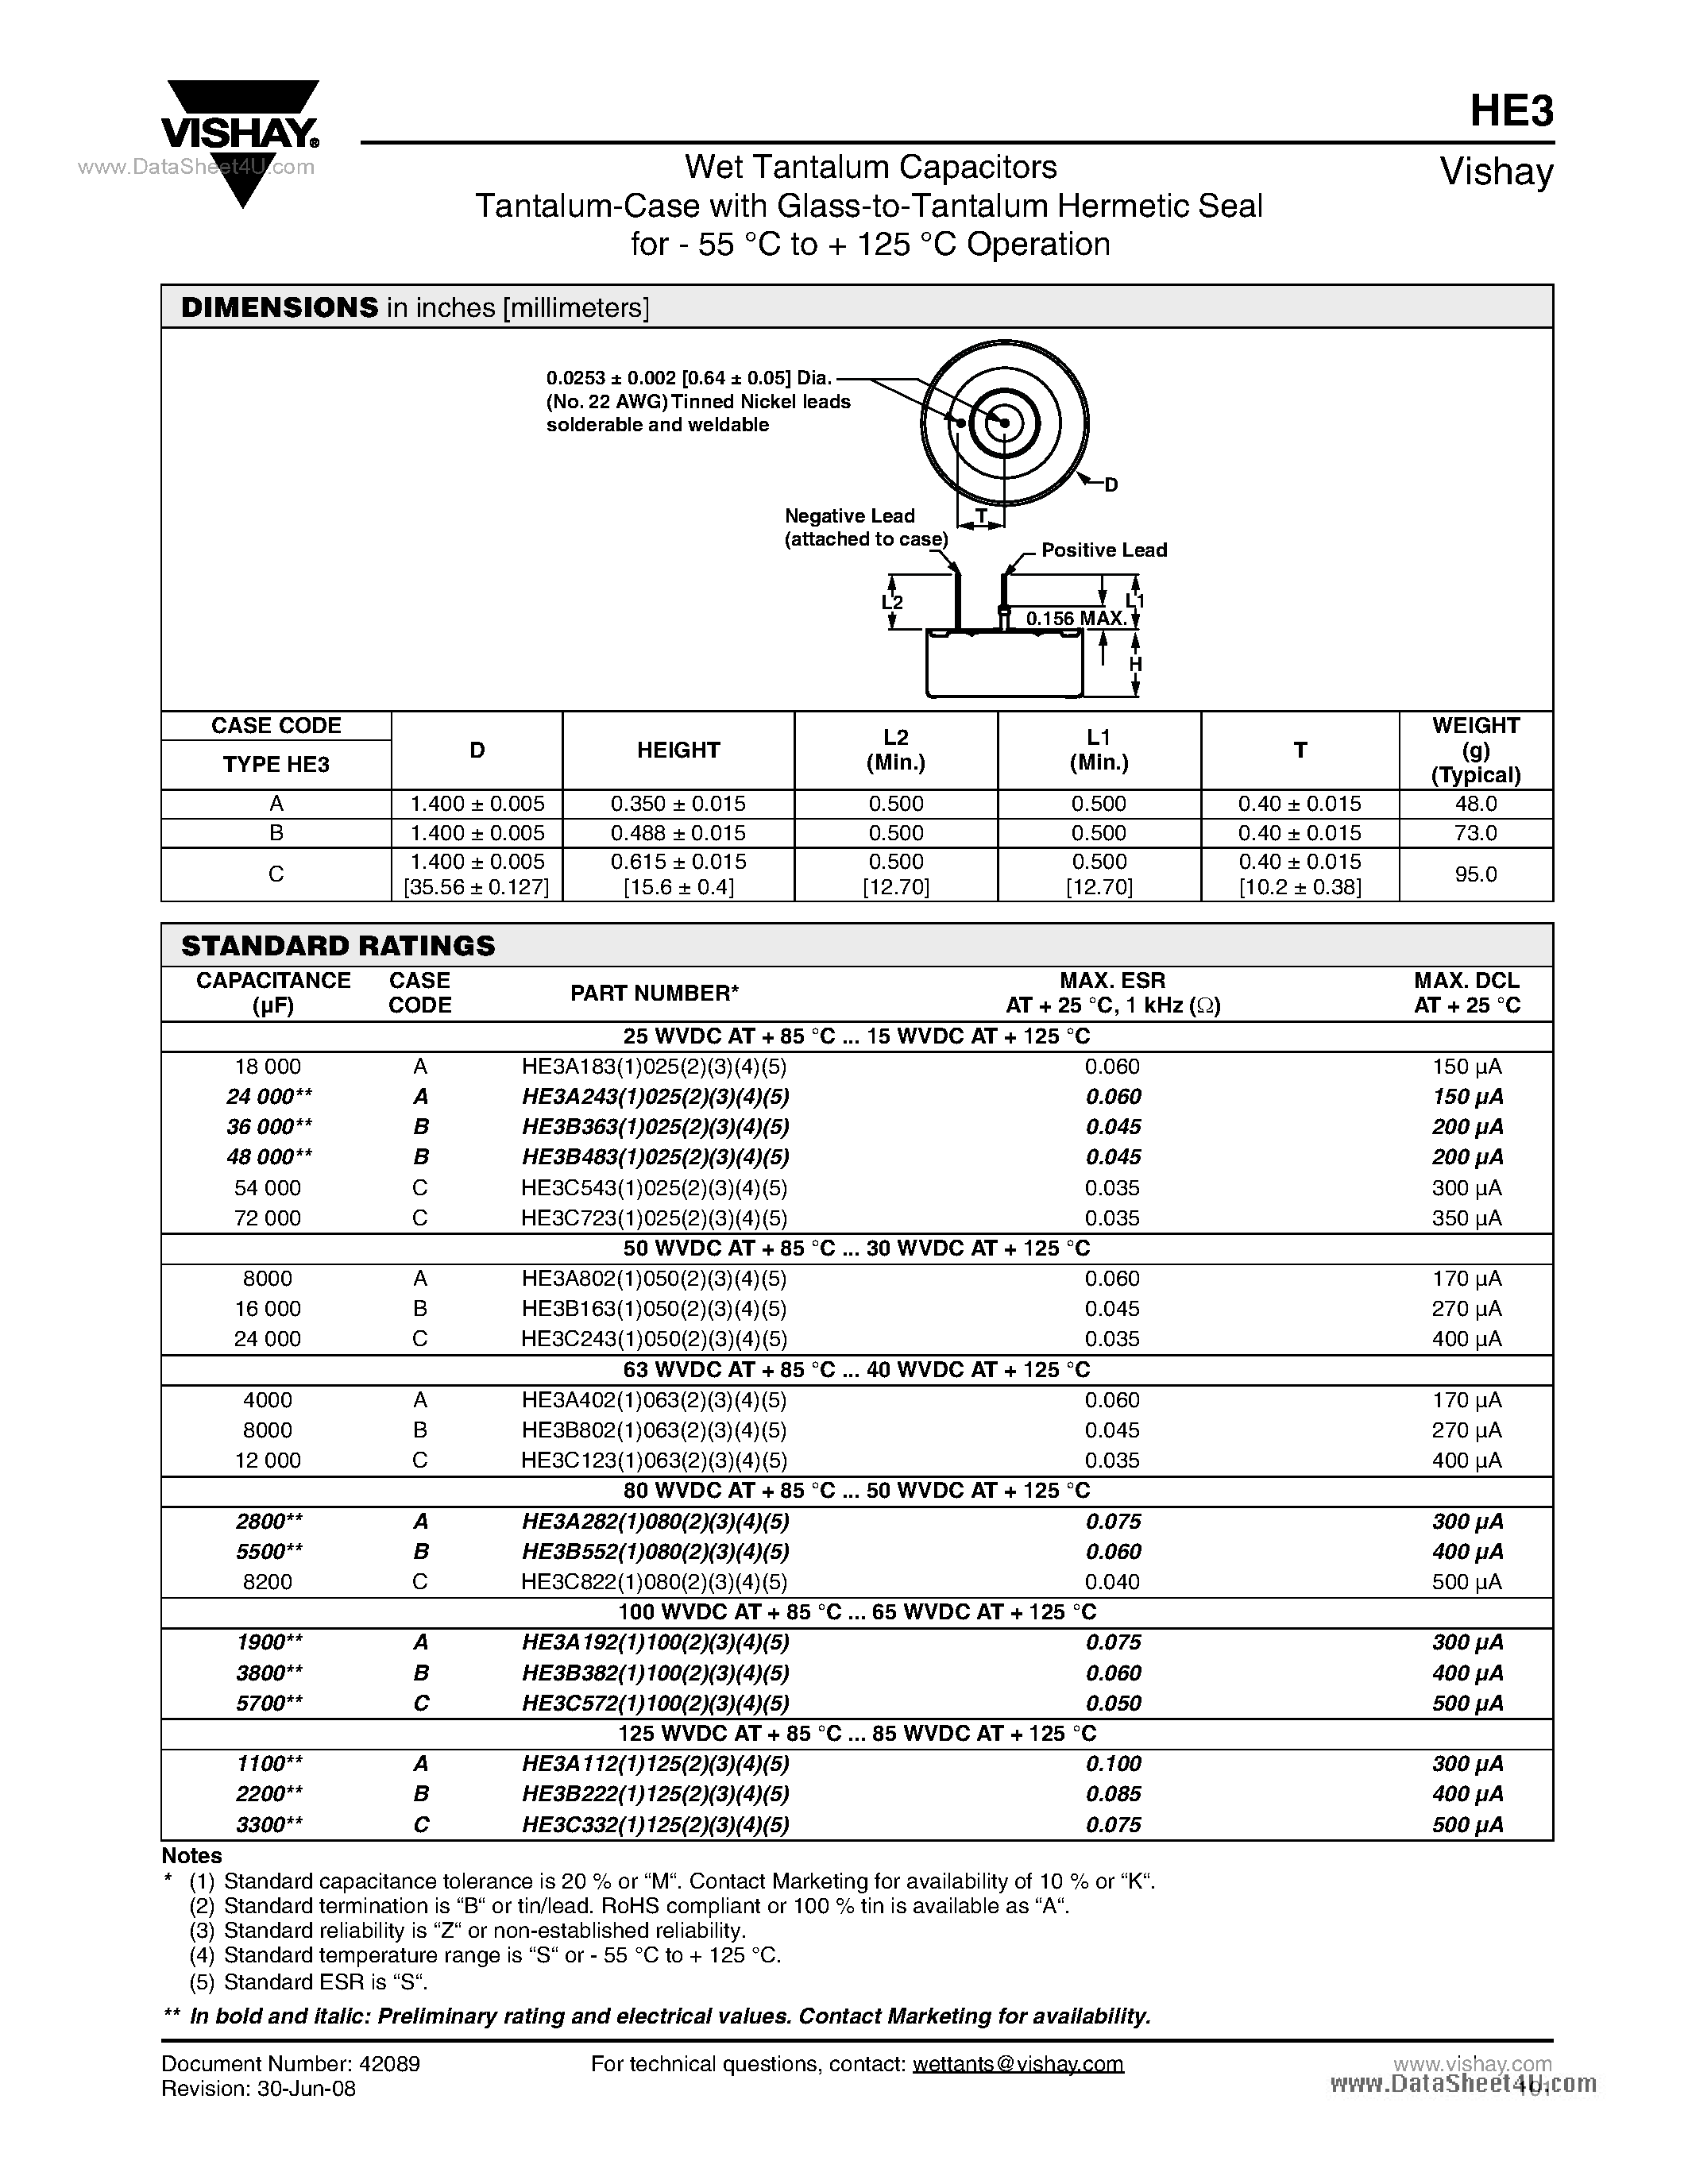 Даташит HE3 - Wet Tantalum Capacitors Tantalum-Case страница 2